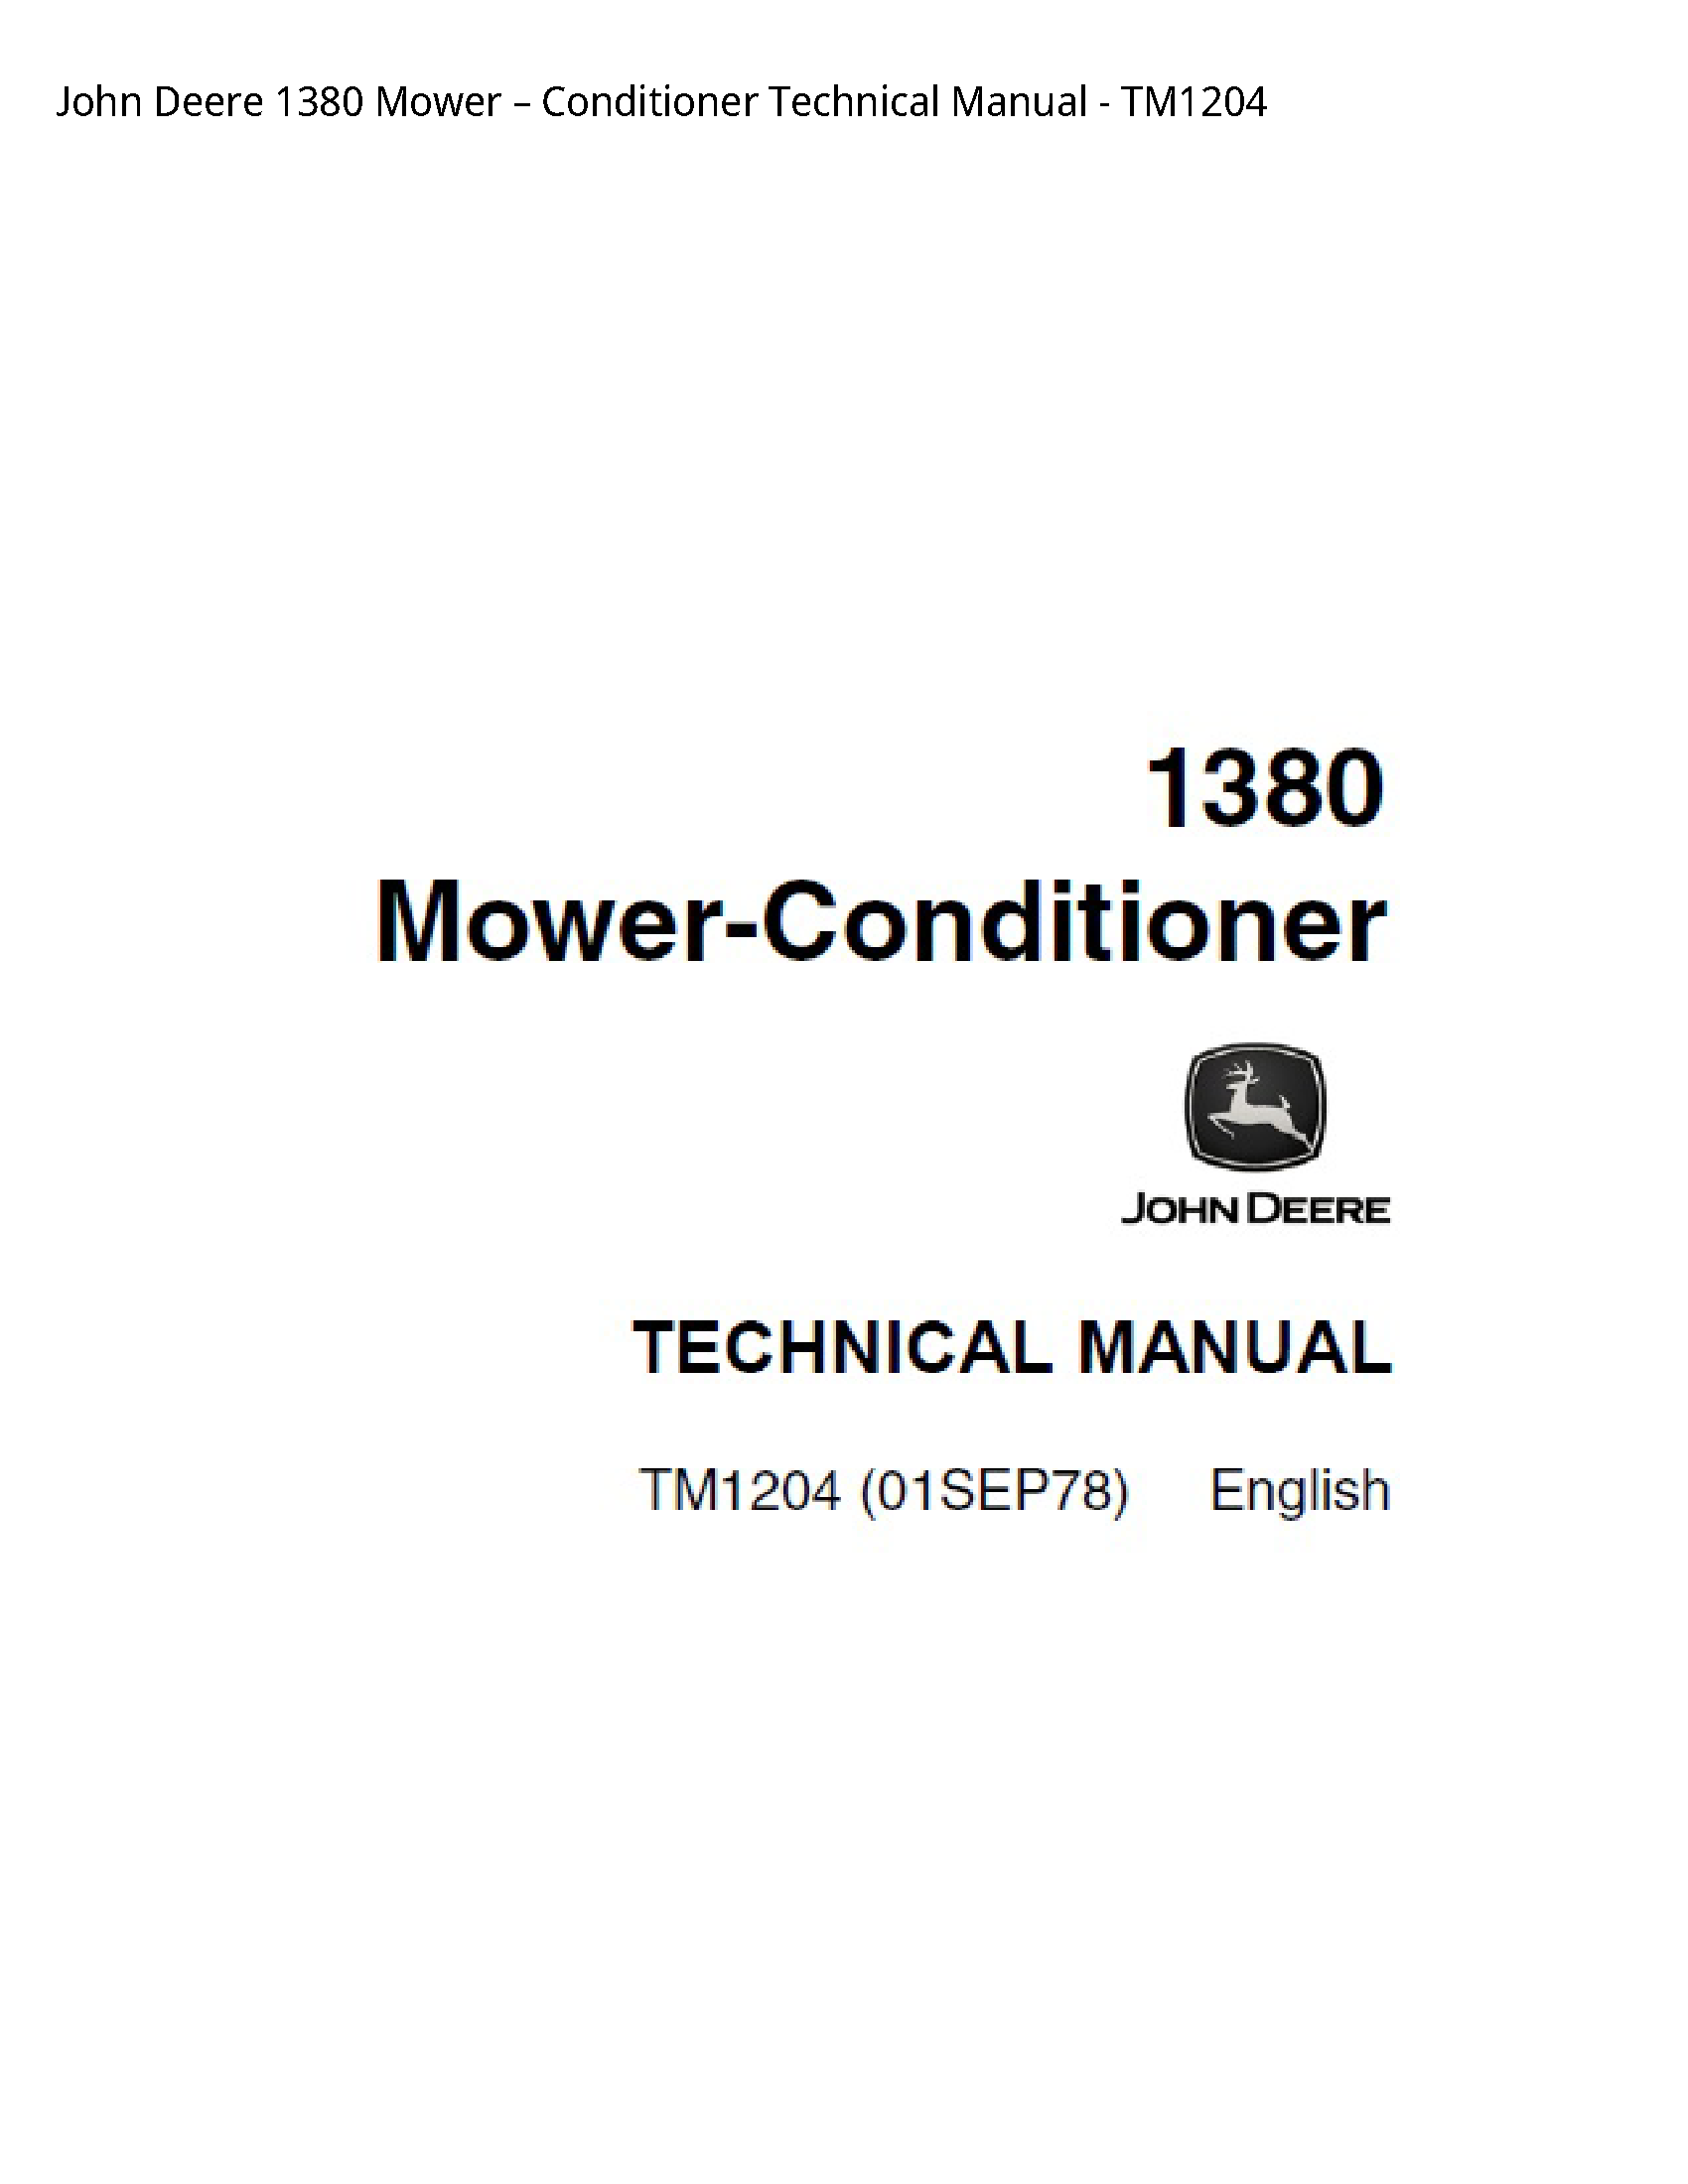 John Deere 1380 Mower Conditioner Technical manual